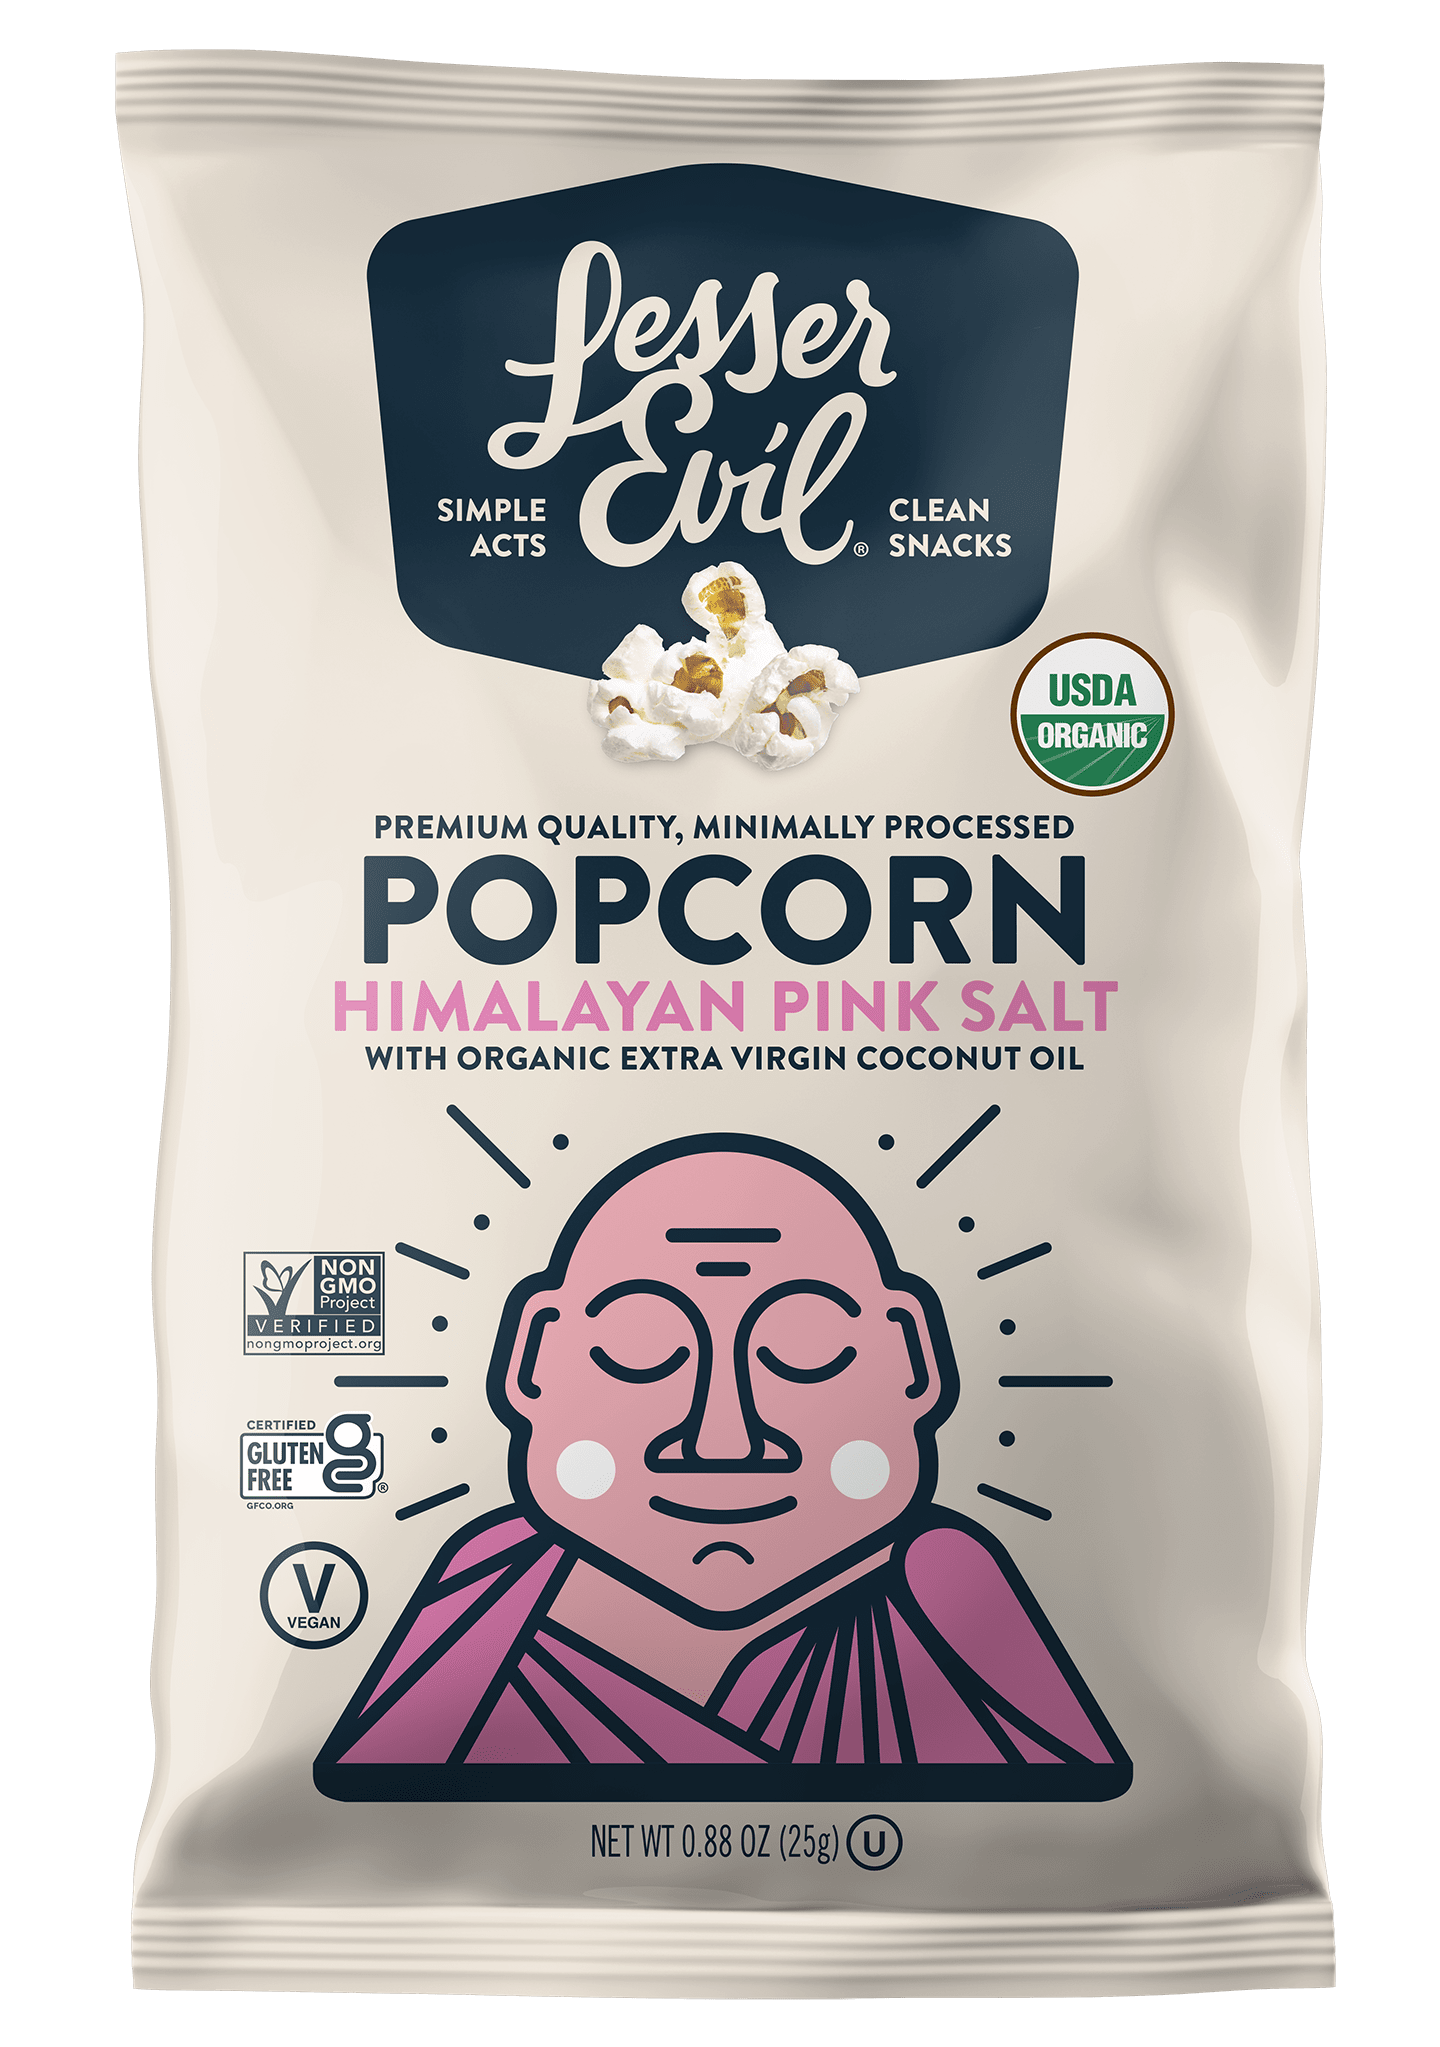 ''''LesserEvil, Organic Popcorn Himalayan Pink Salt'''' 18 units per case 0.9 oz